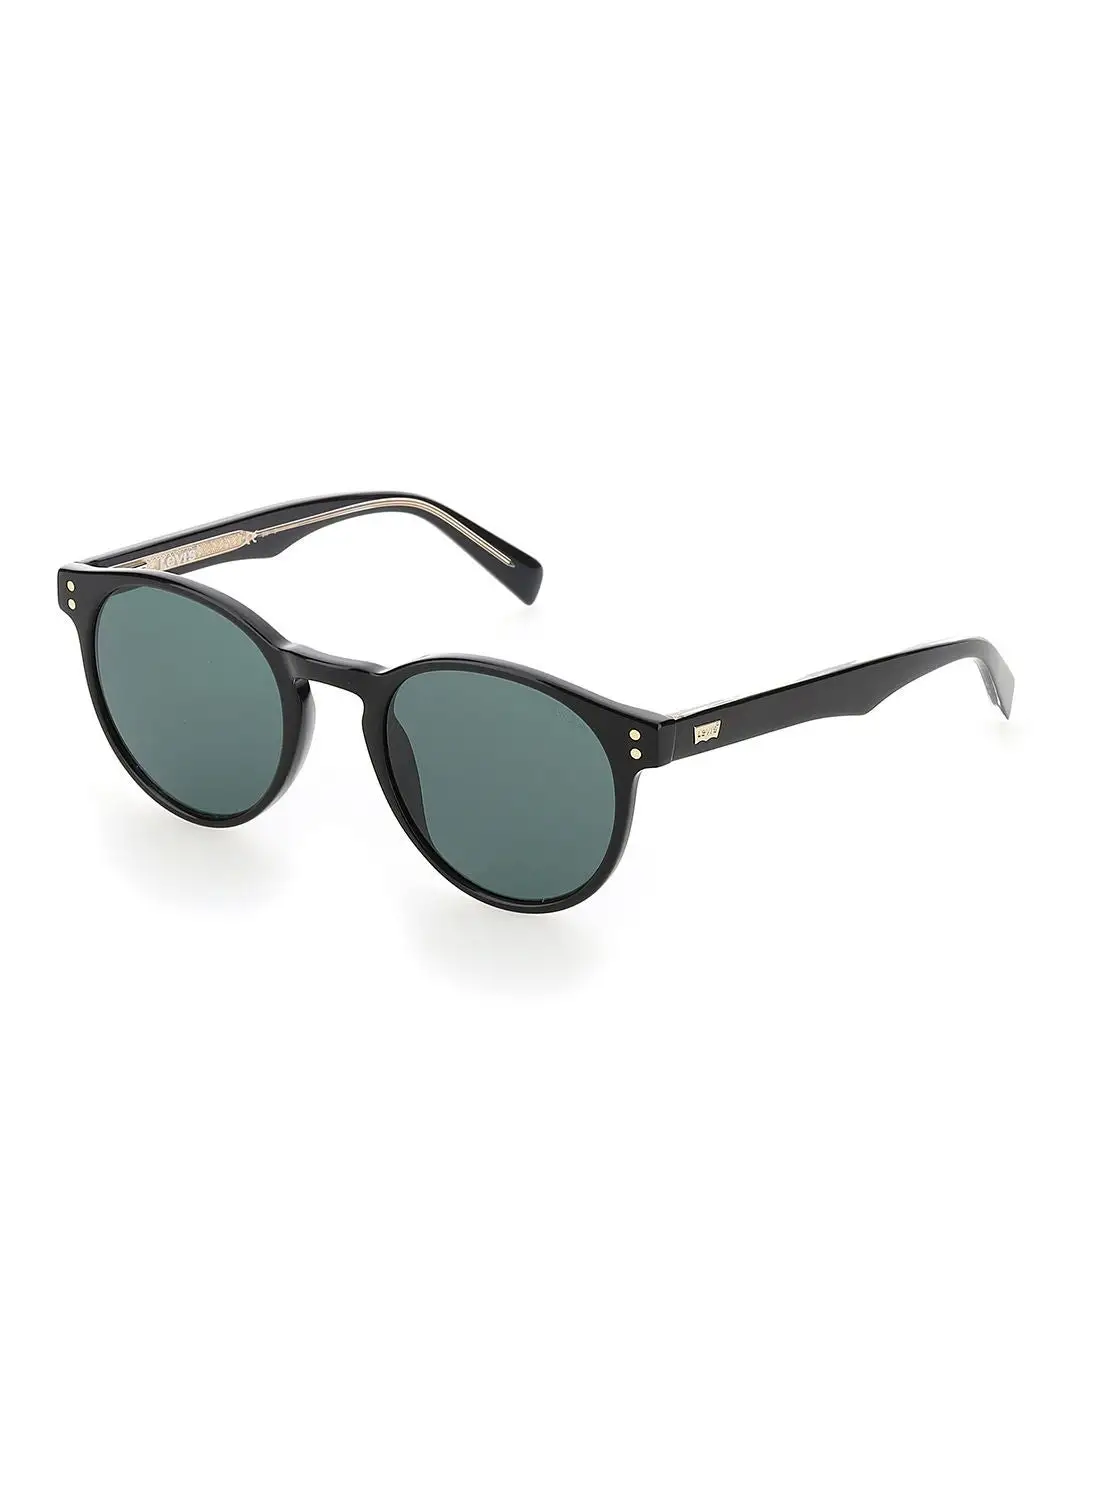 Levi's Men's UV Protection Round Sunglasses - Lv 5005/S Black 50 - Lens Size: 50 Mm